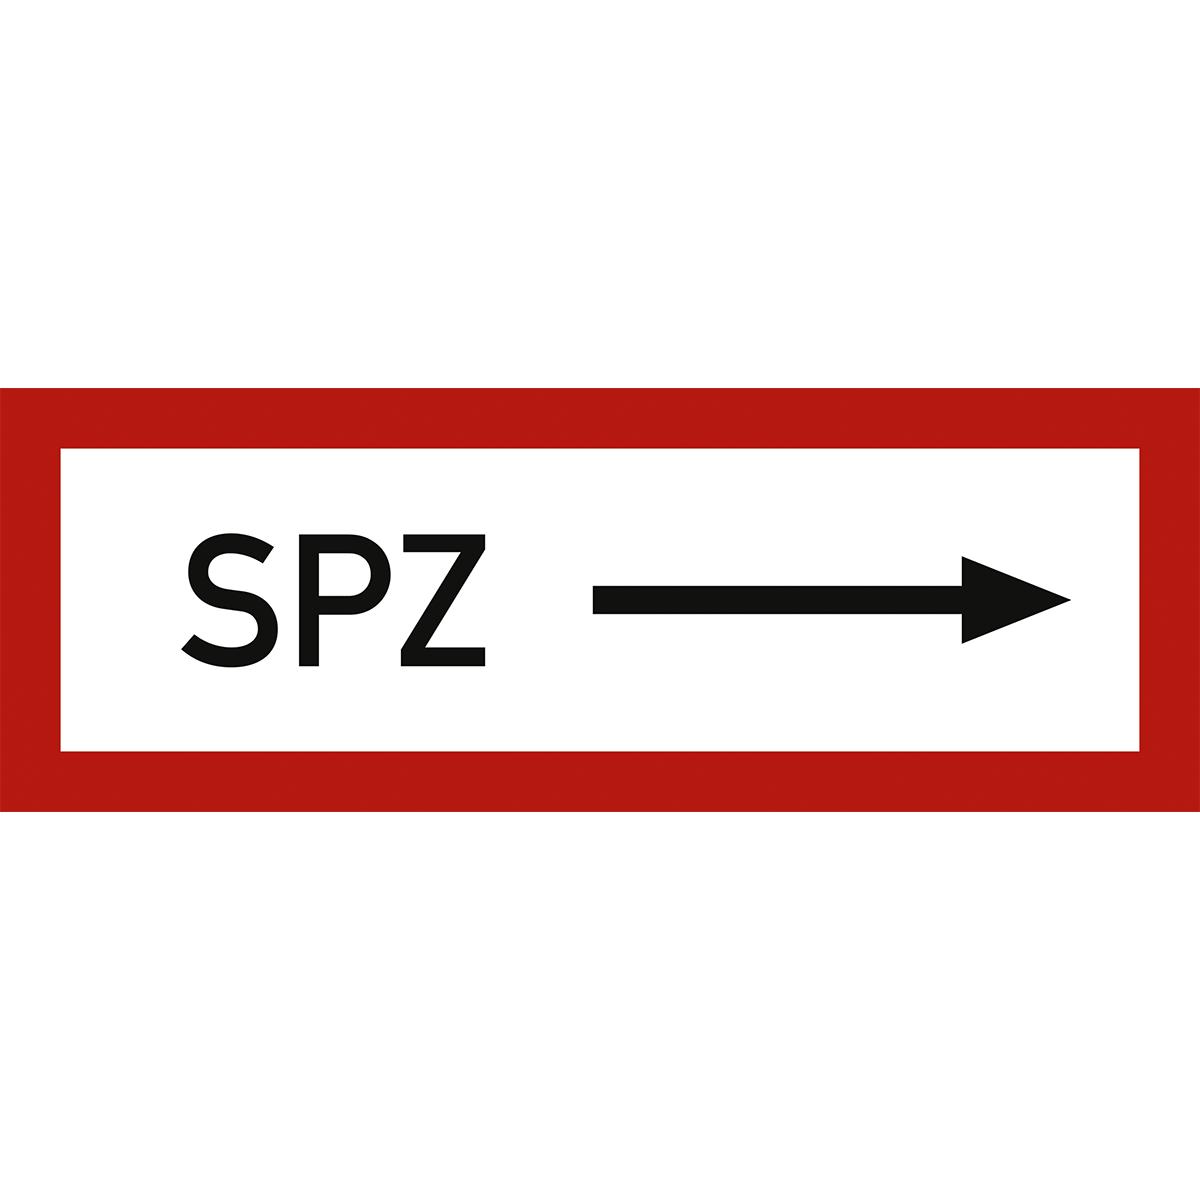 Hinweisschild mit dem Text: SPZ + Pfeil nach rechts